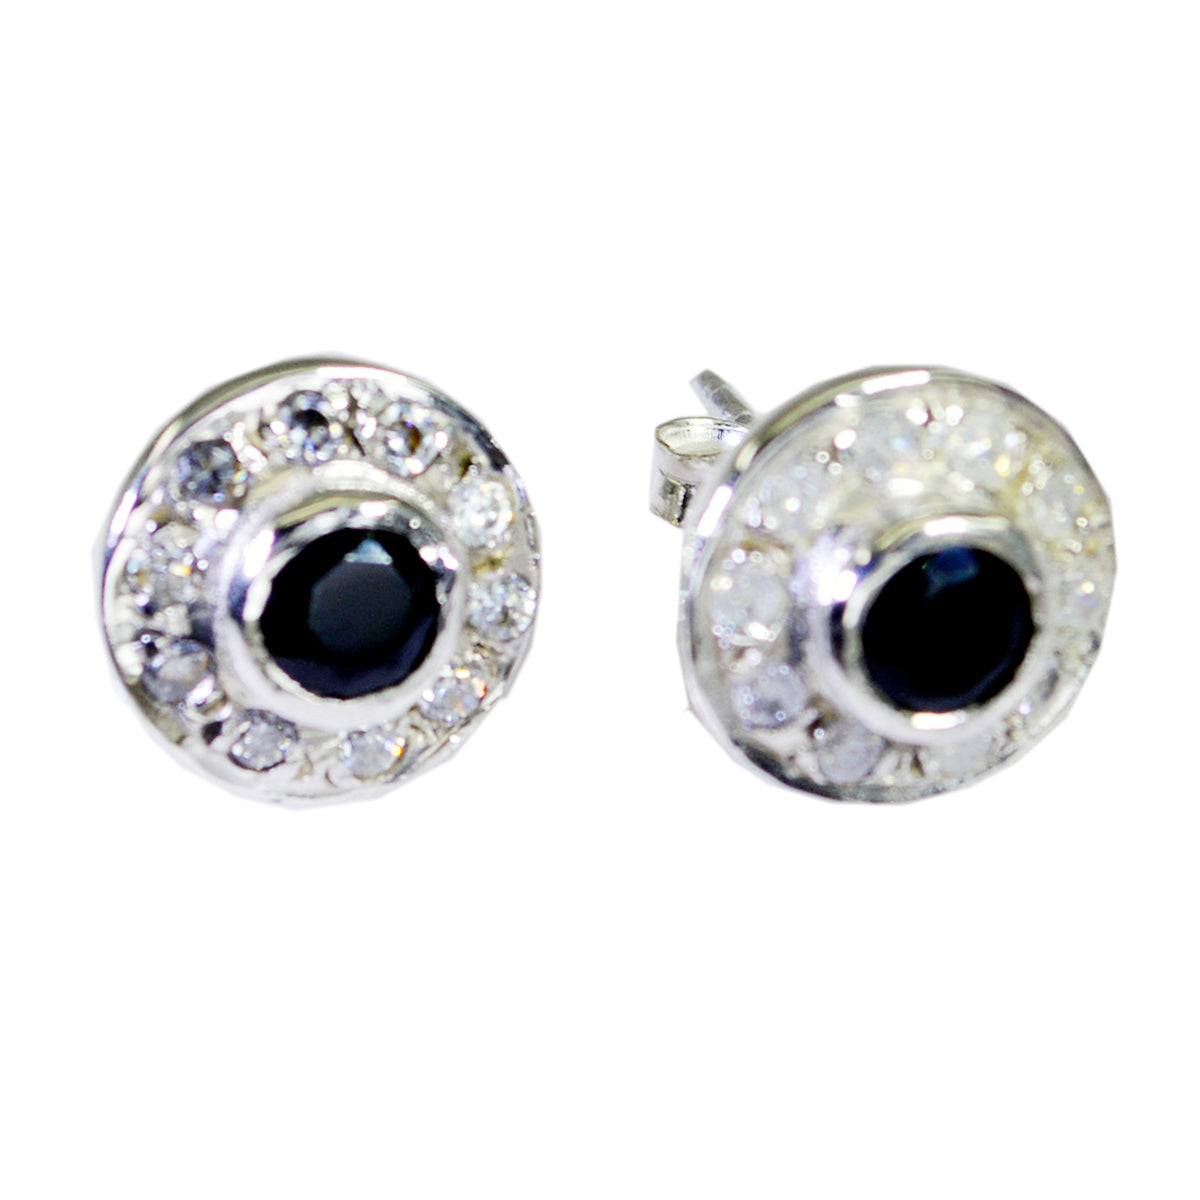 Riyo Genuine Gems round Faceted Black Onyx Silver Earrings easter Sunday gift